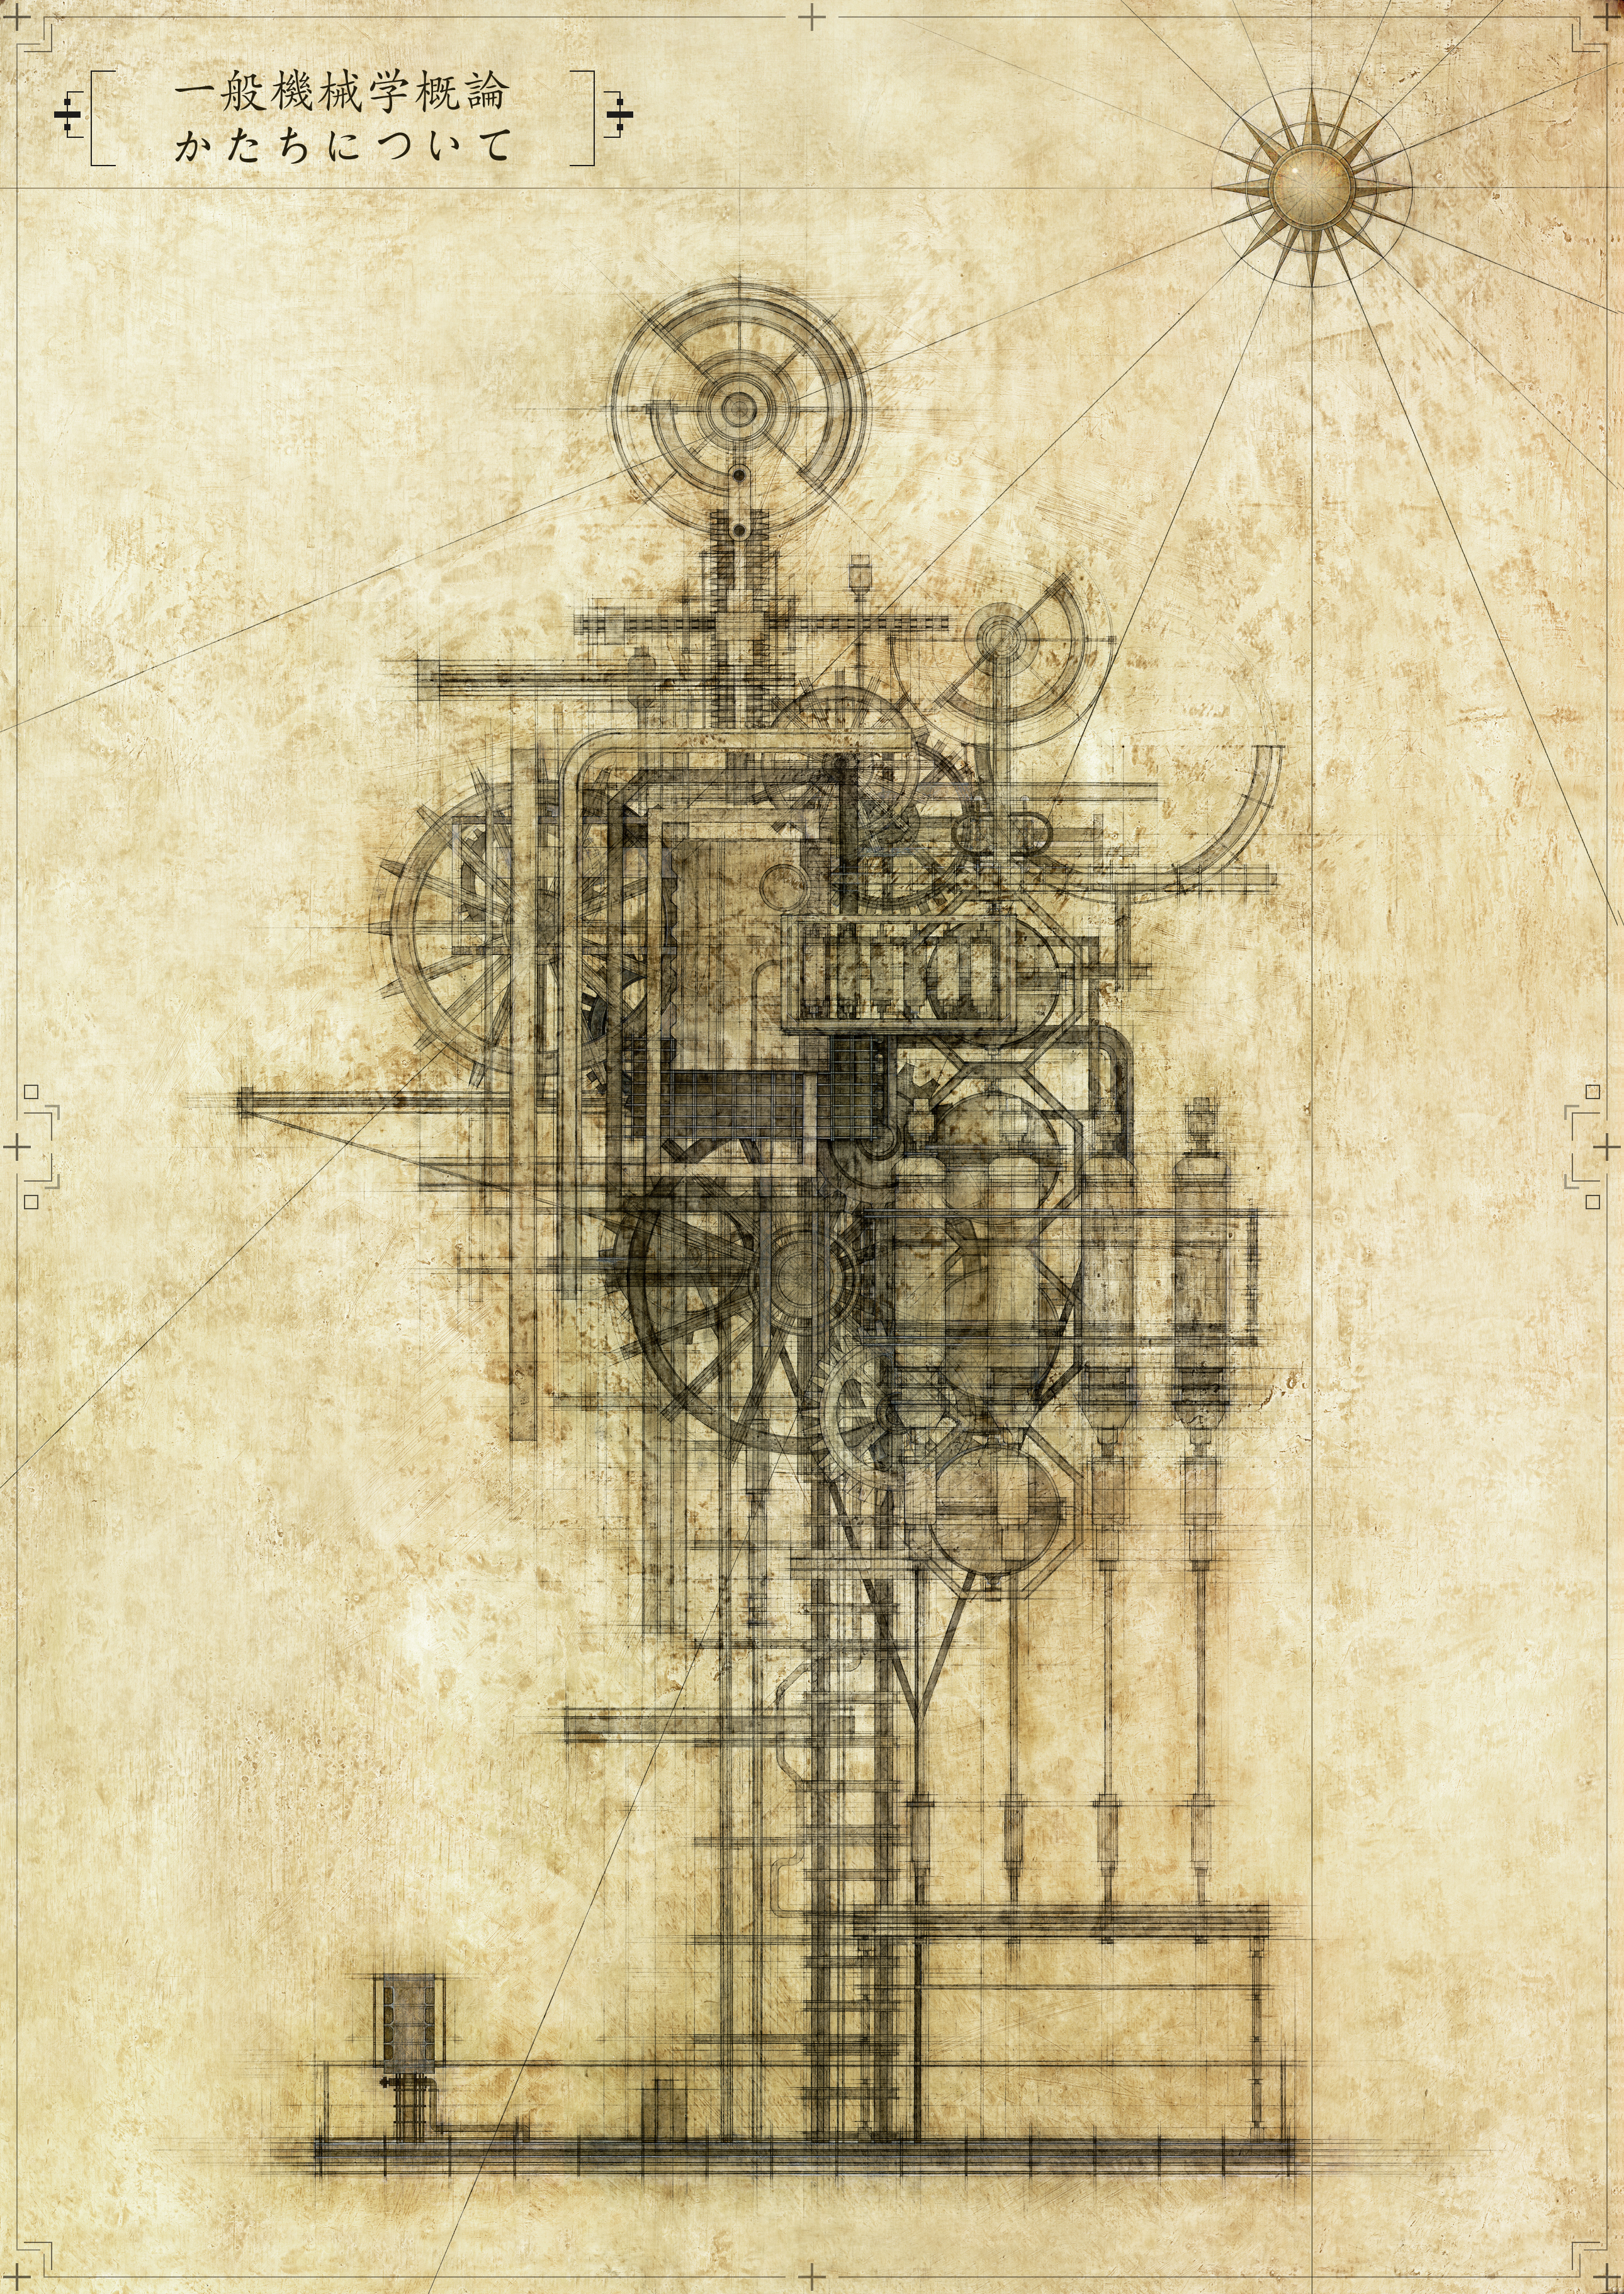 About the Artwork Machine Form  by Shinya Asanuma